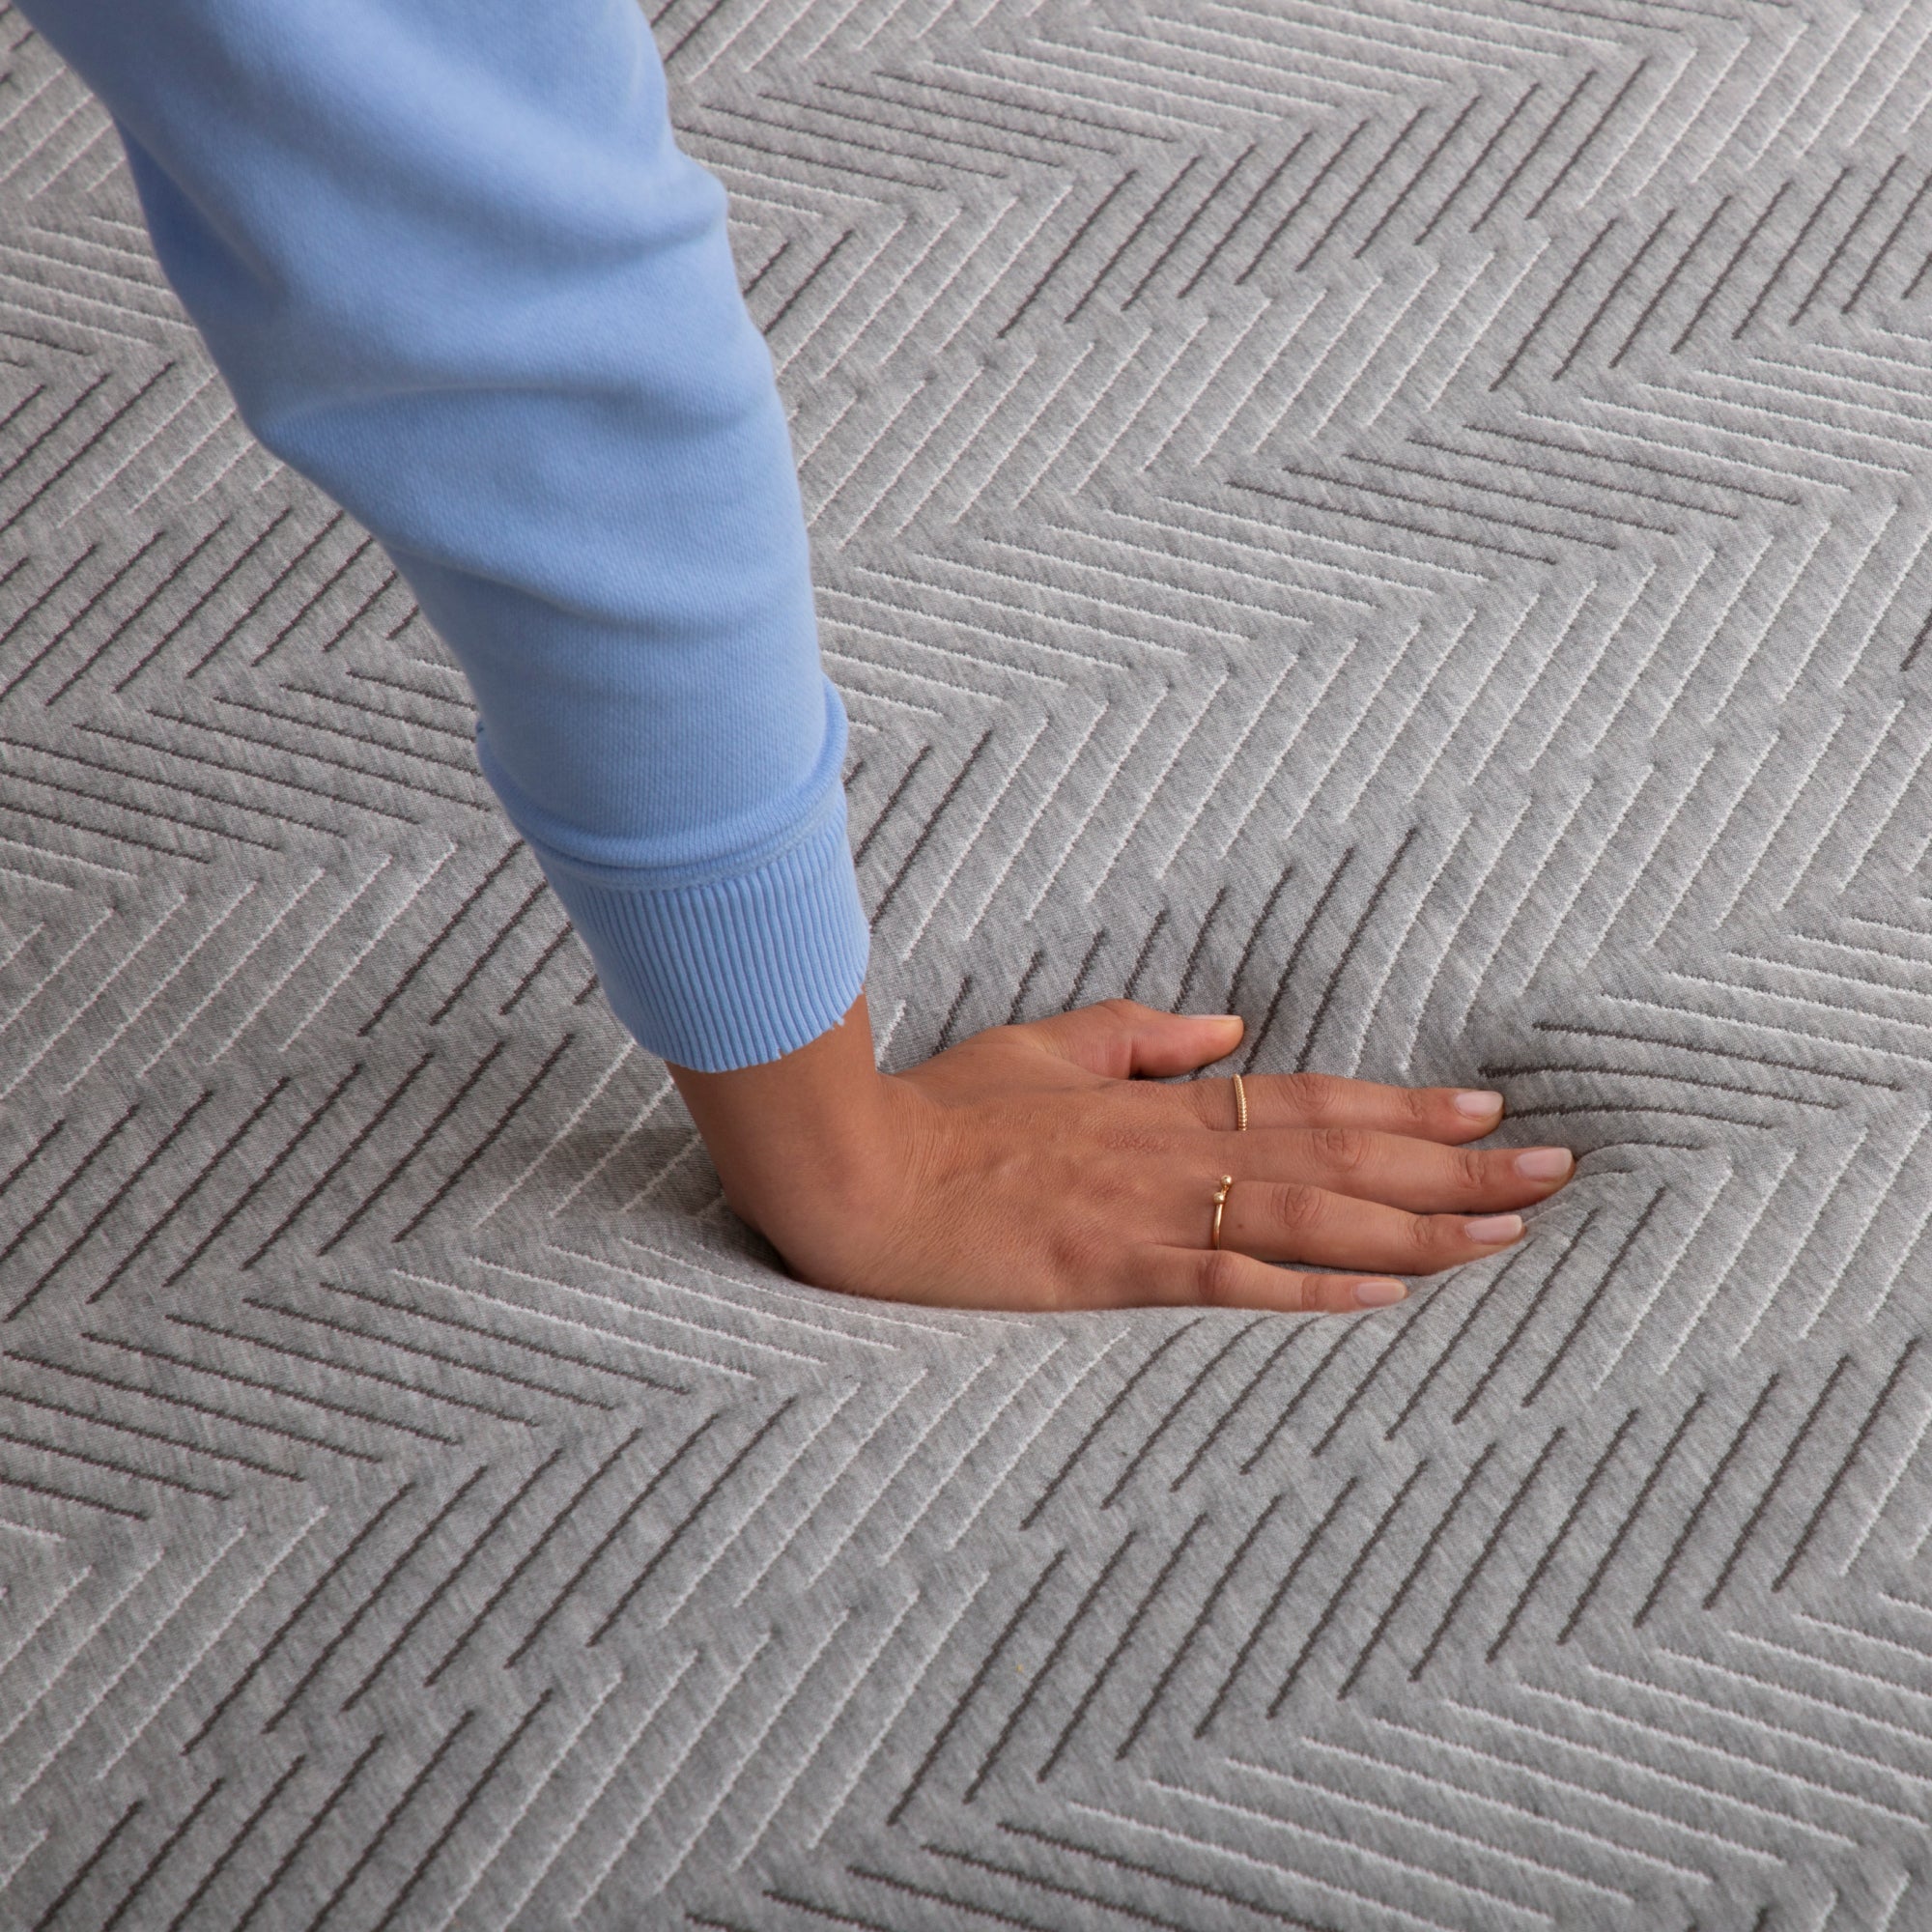 Hand pressing down on Hybrid Firm mattress